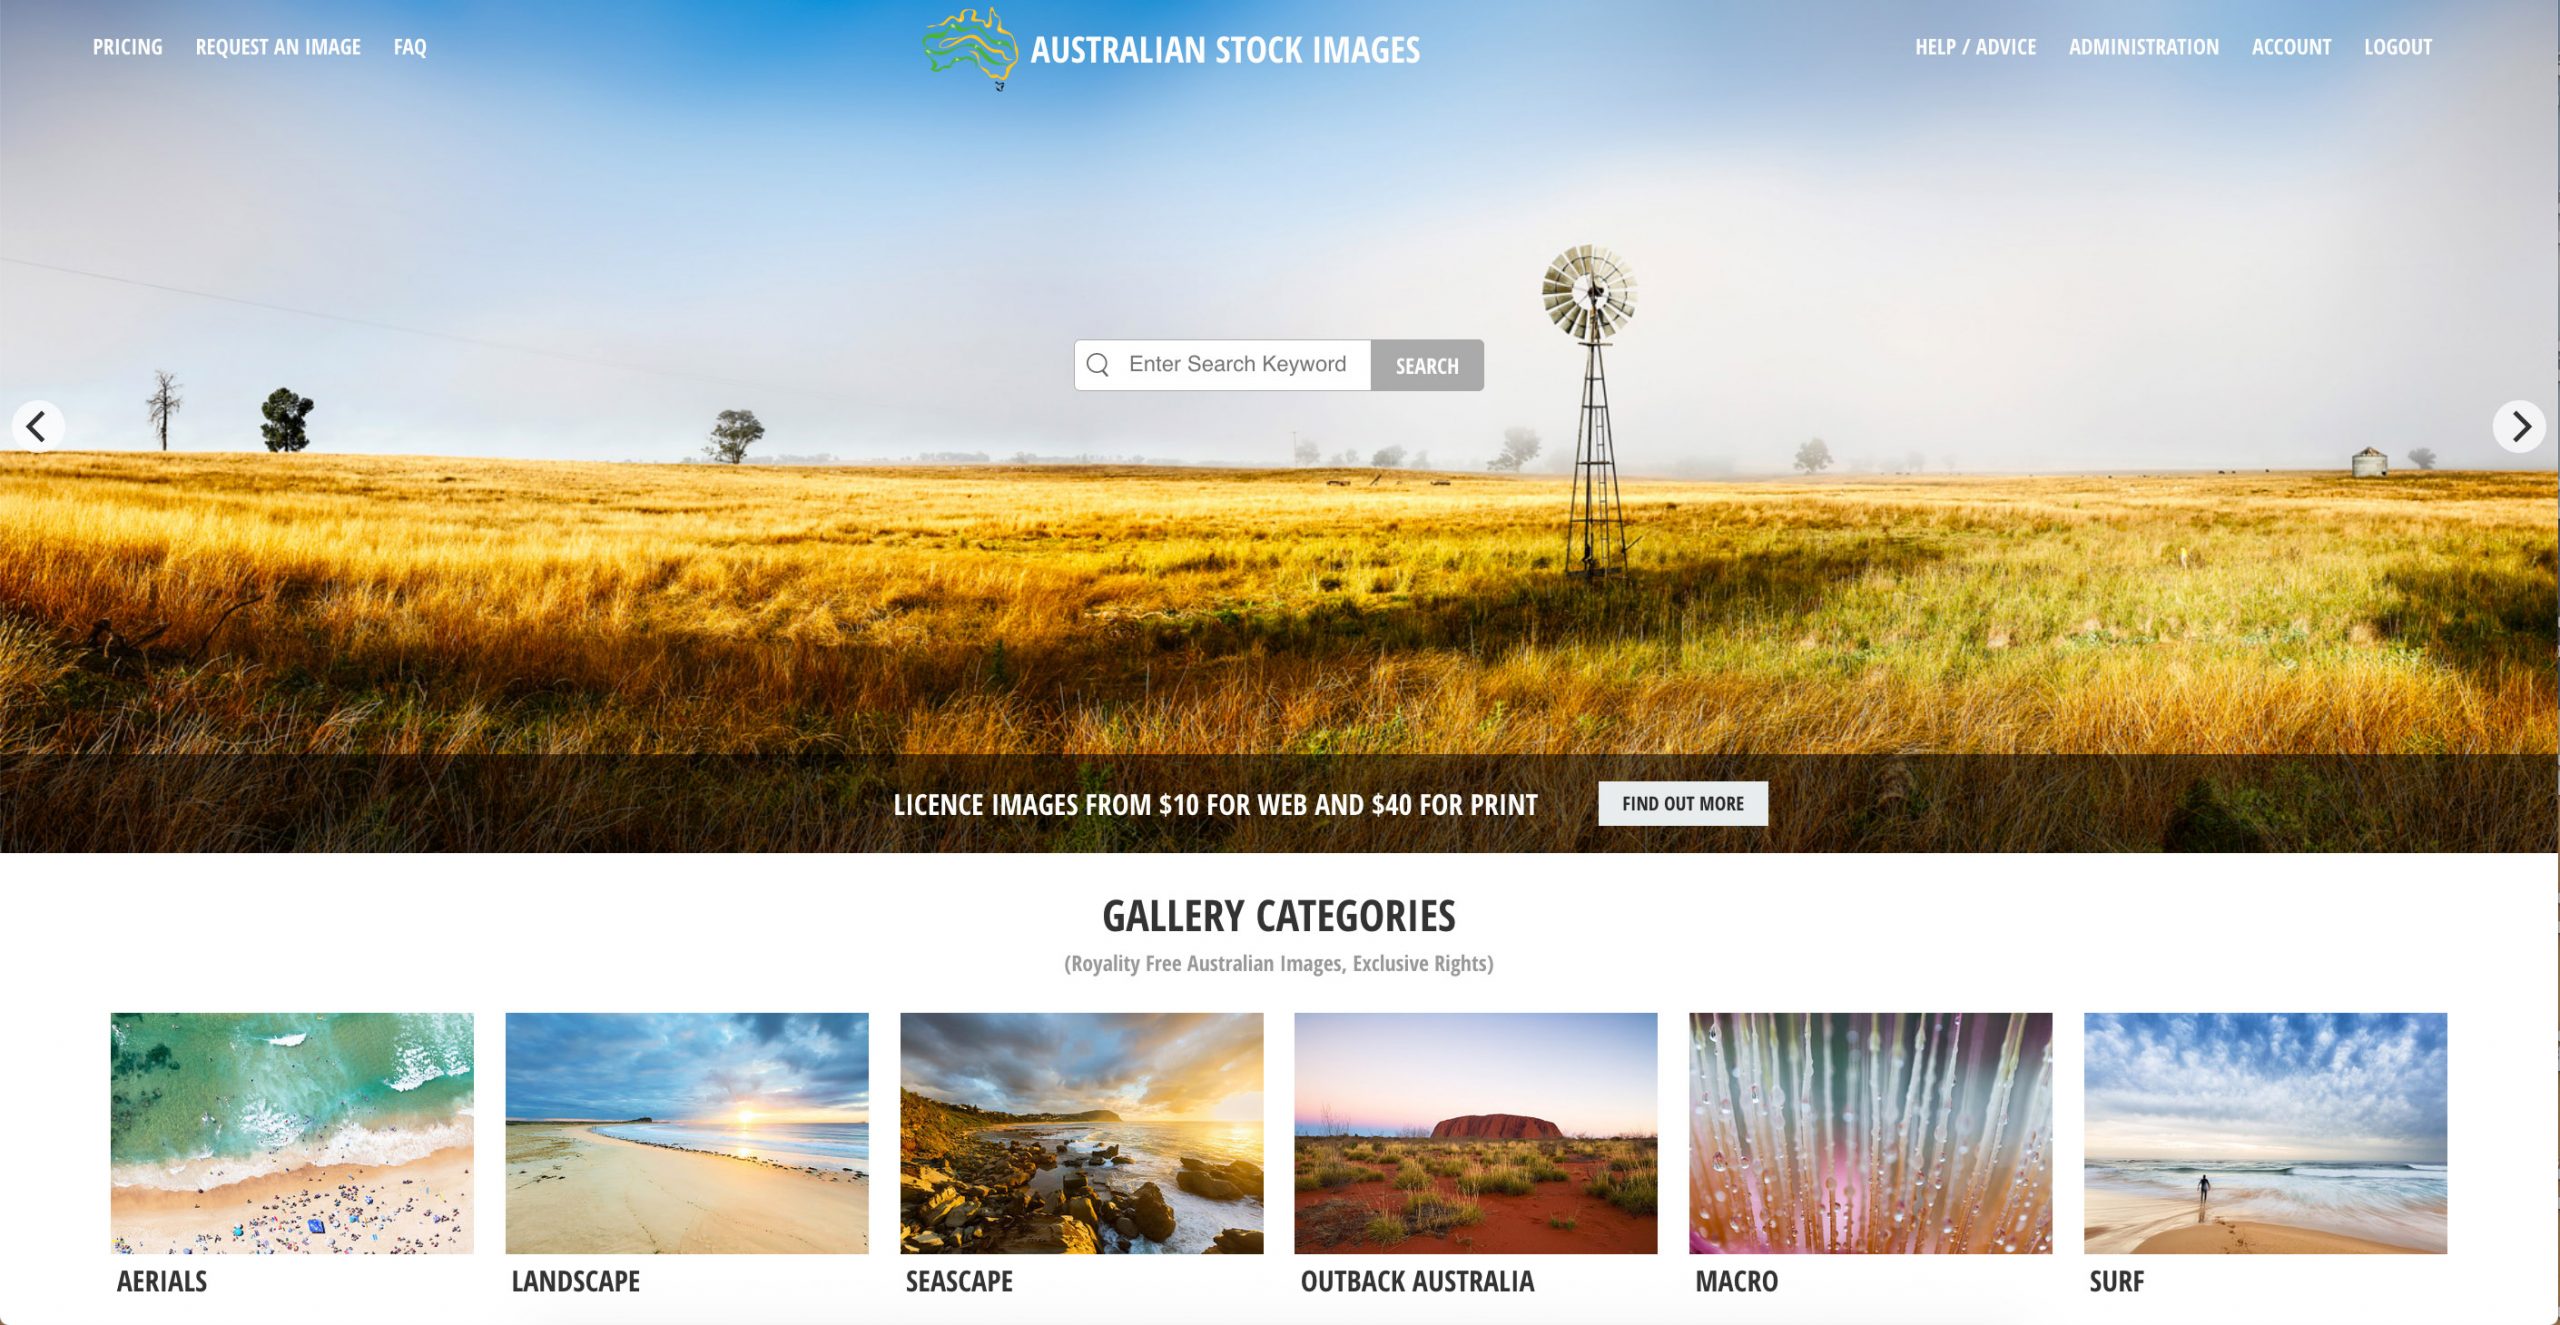 The Australian Stock Images Website